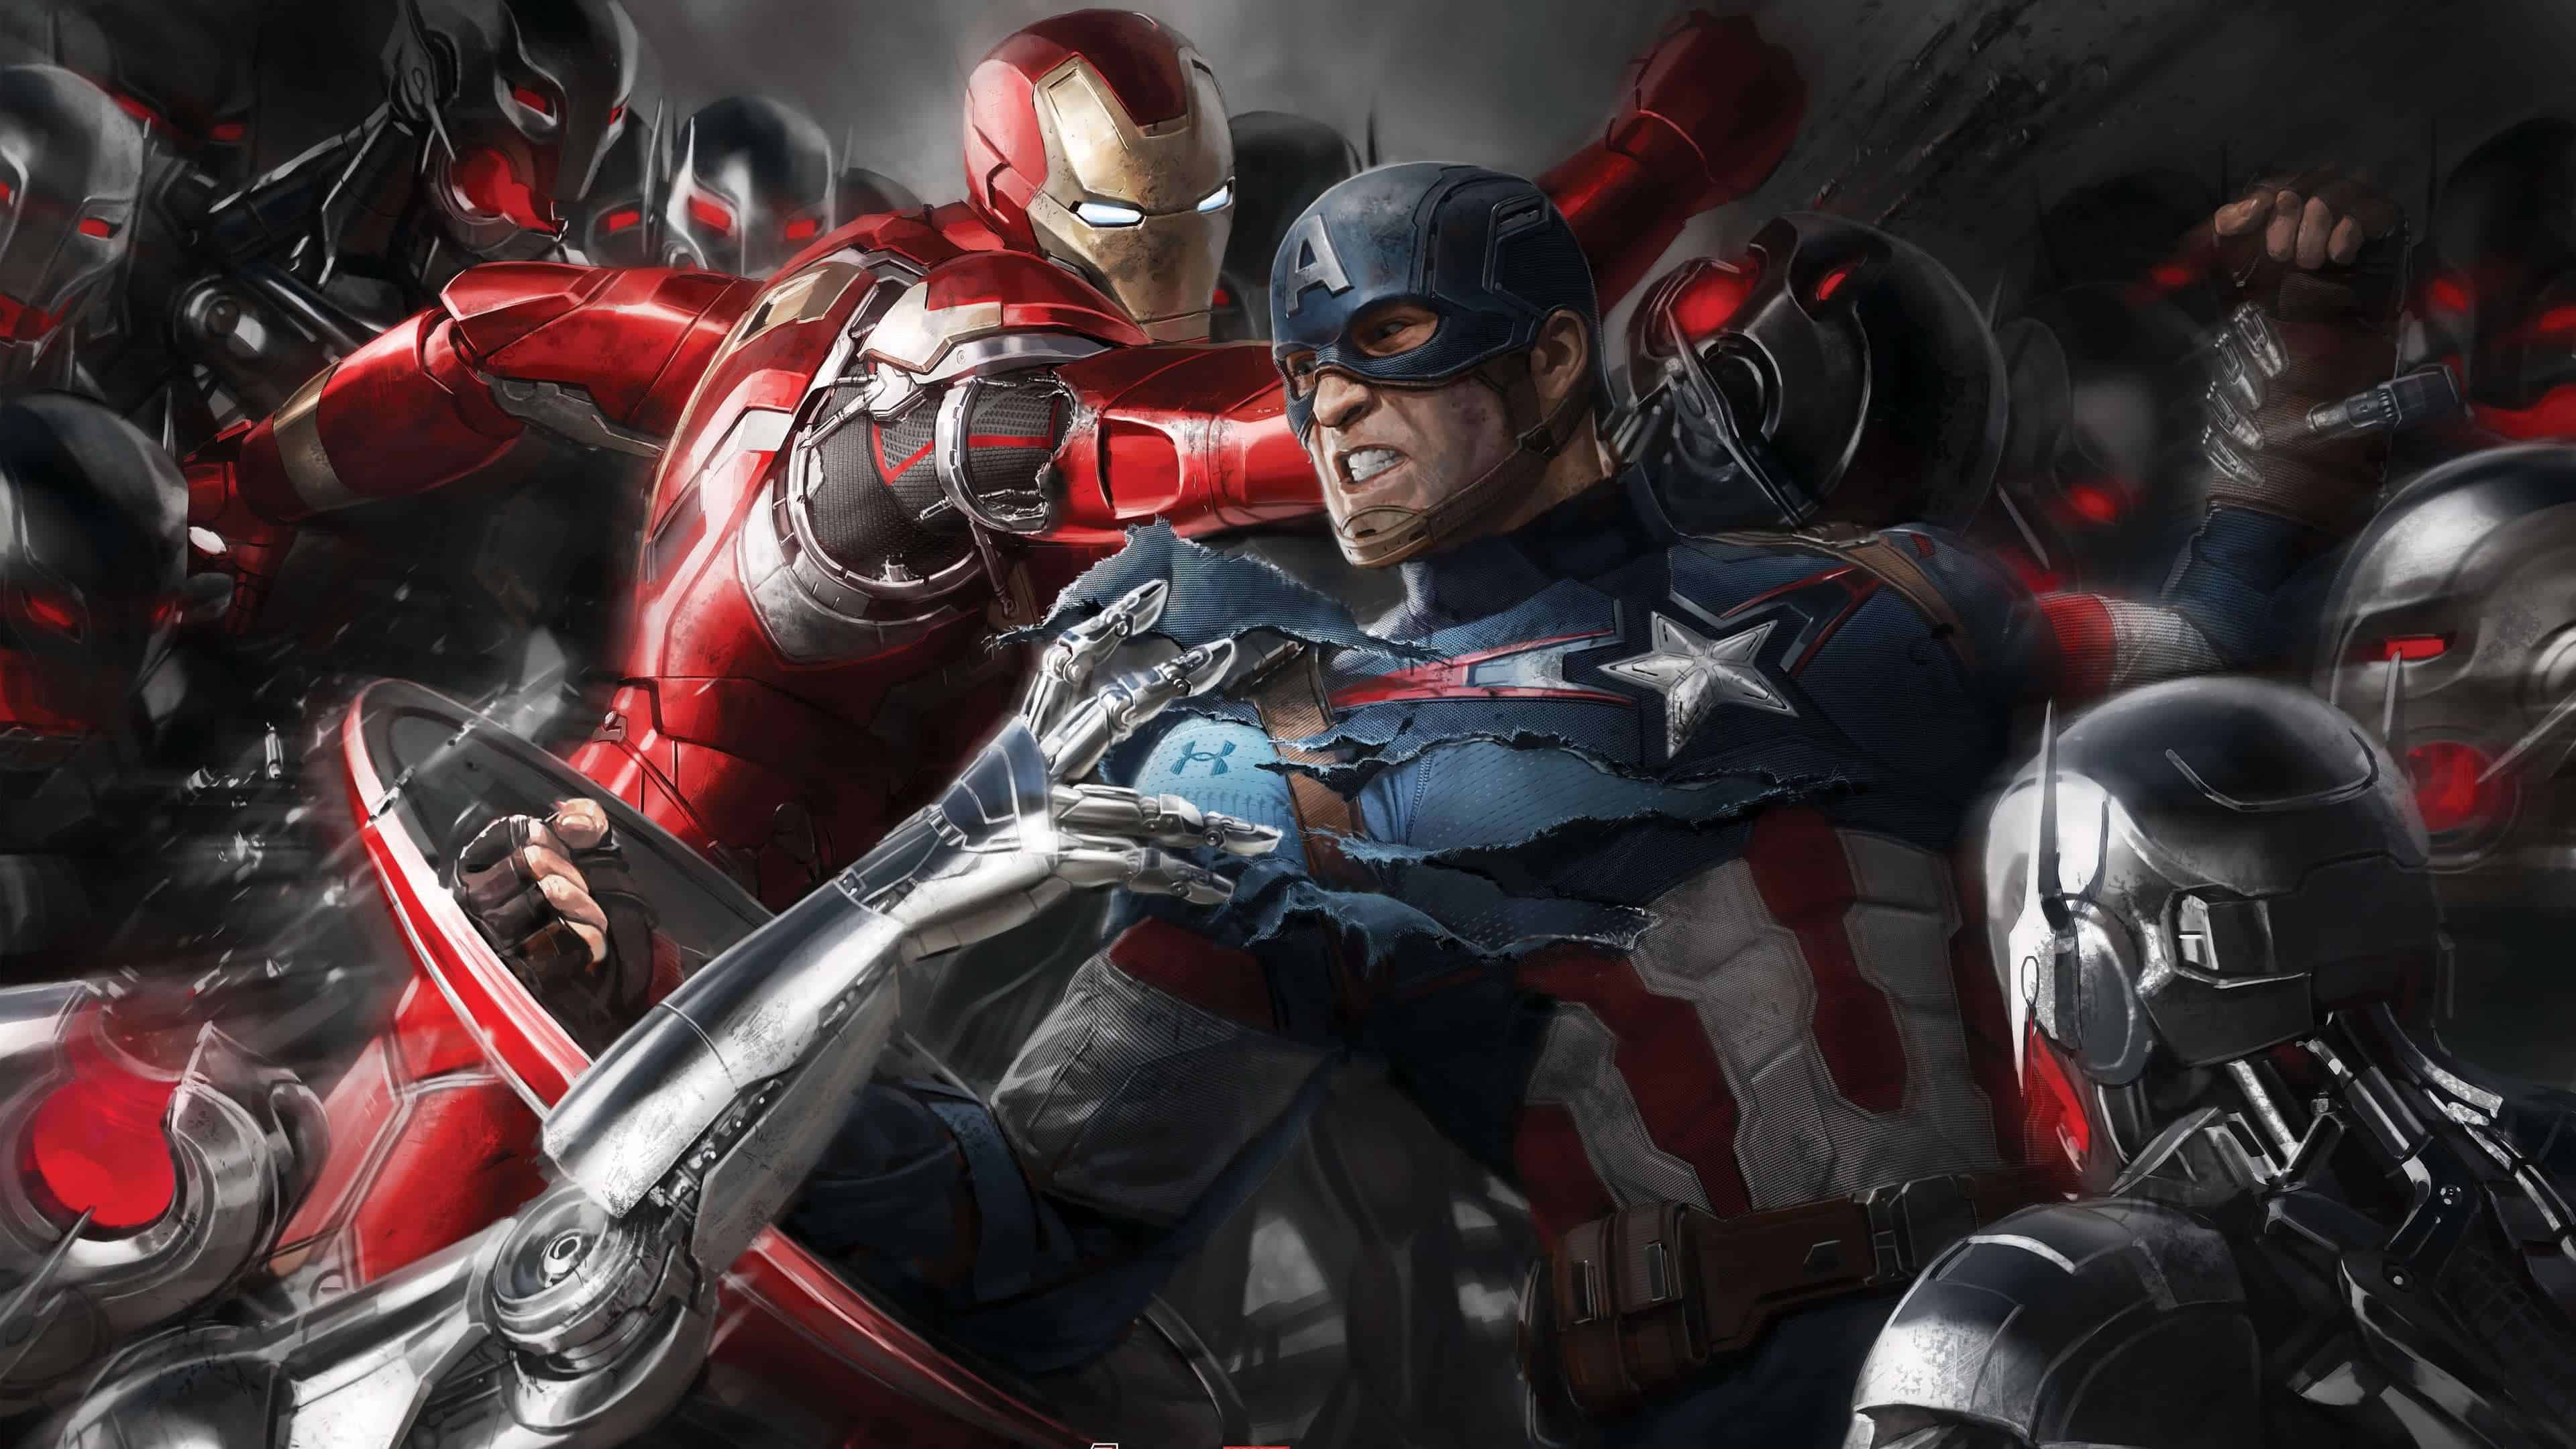 Iron Man vs Captain America 4K Wallpapers - Top Free Iron Man vs